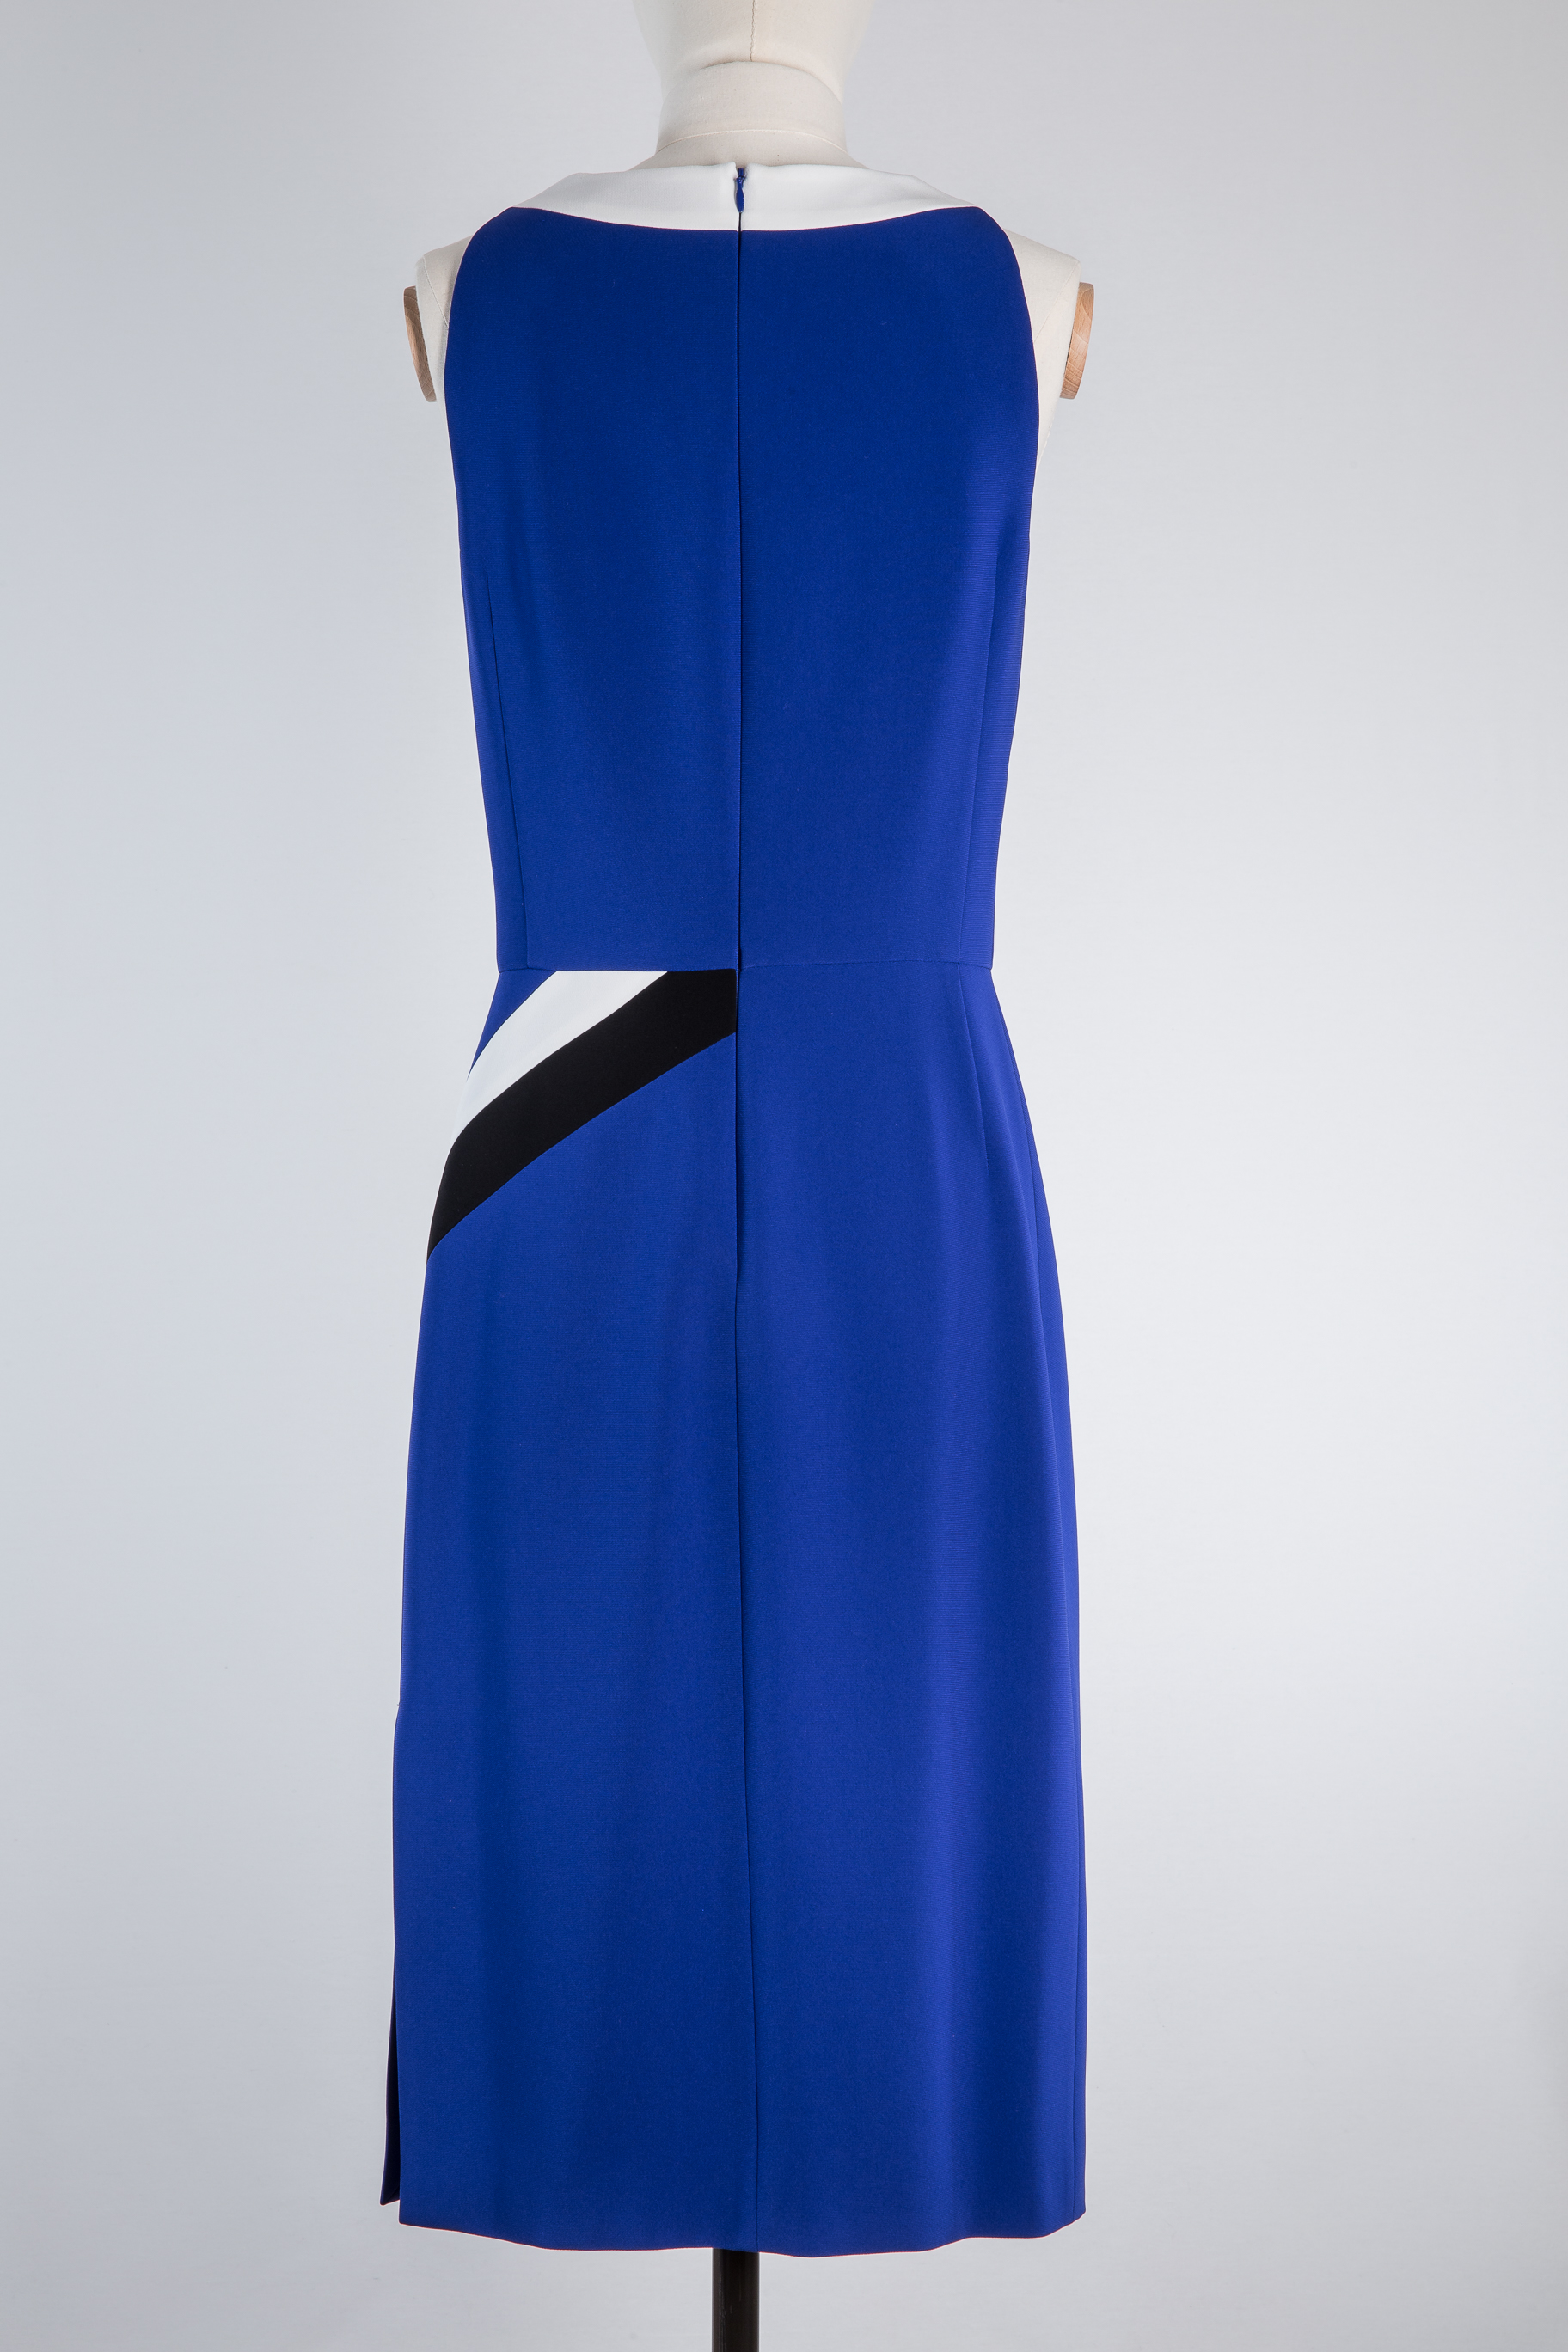 Altuzarra Dress, FR36 - Huntessa Luxury Online Consignment Boutique